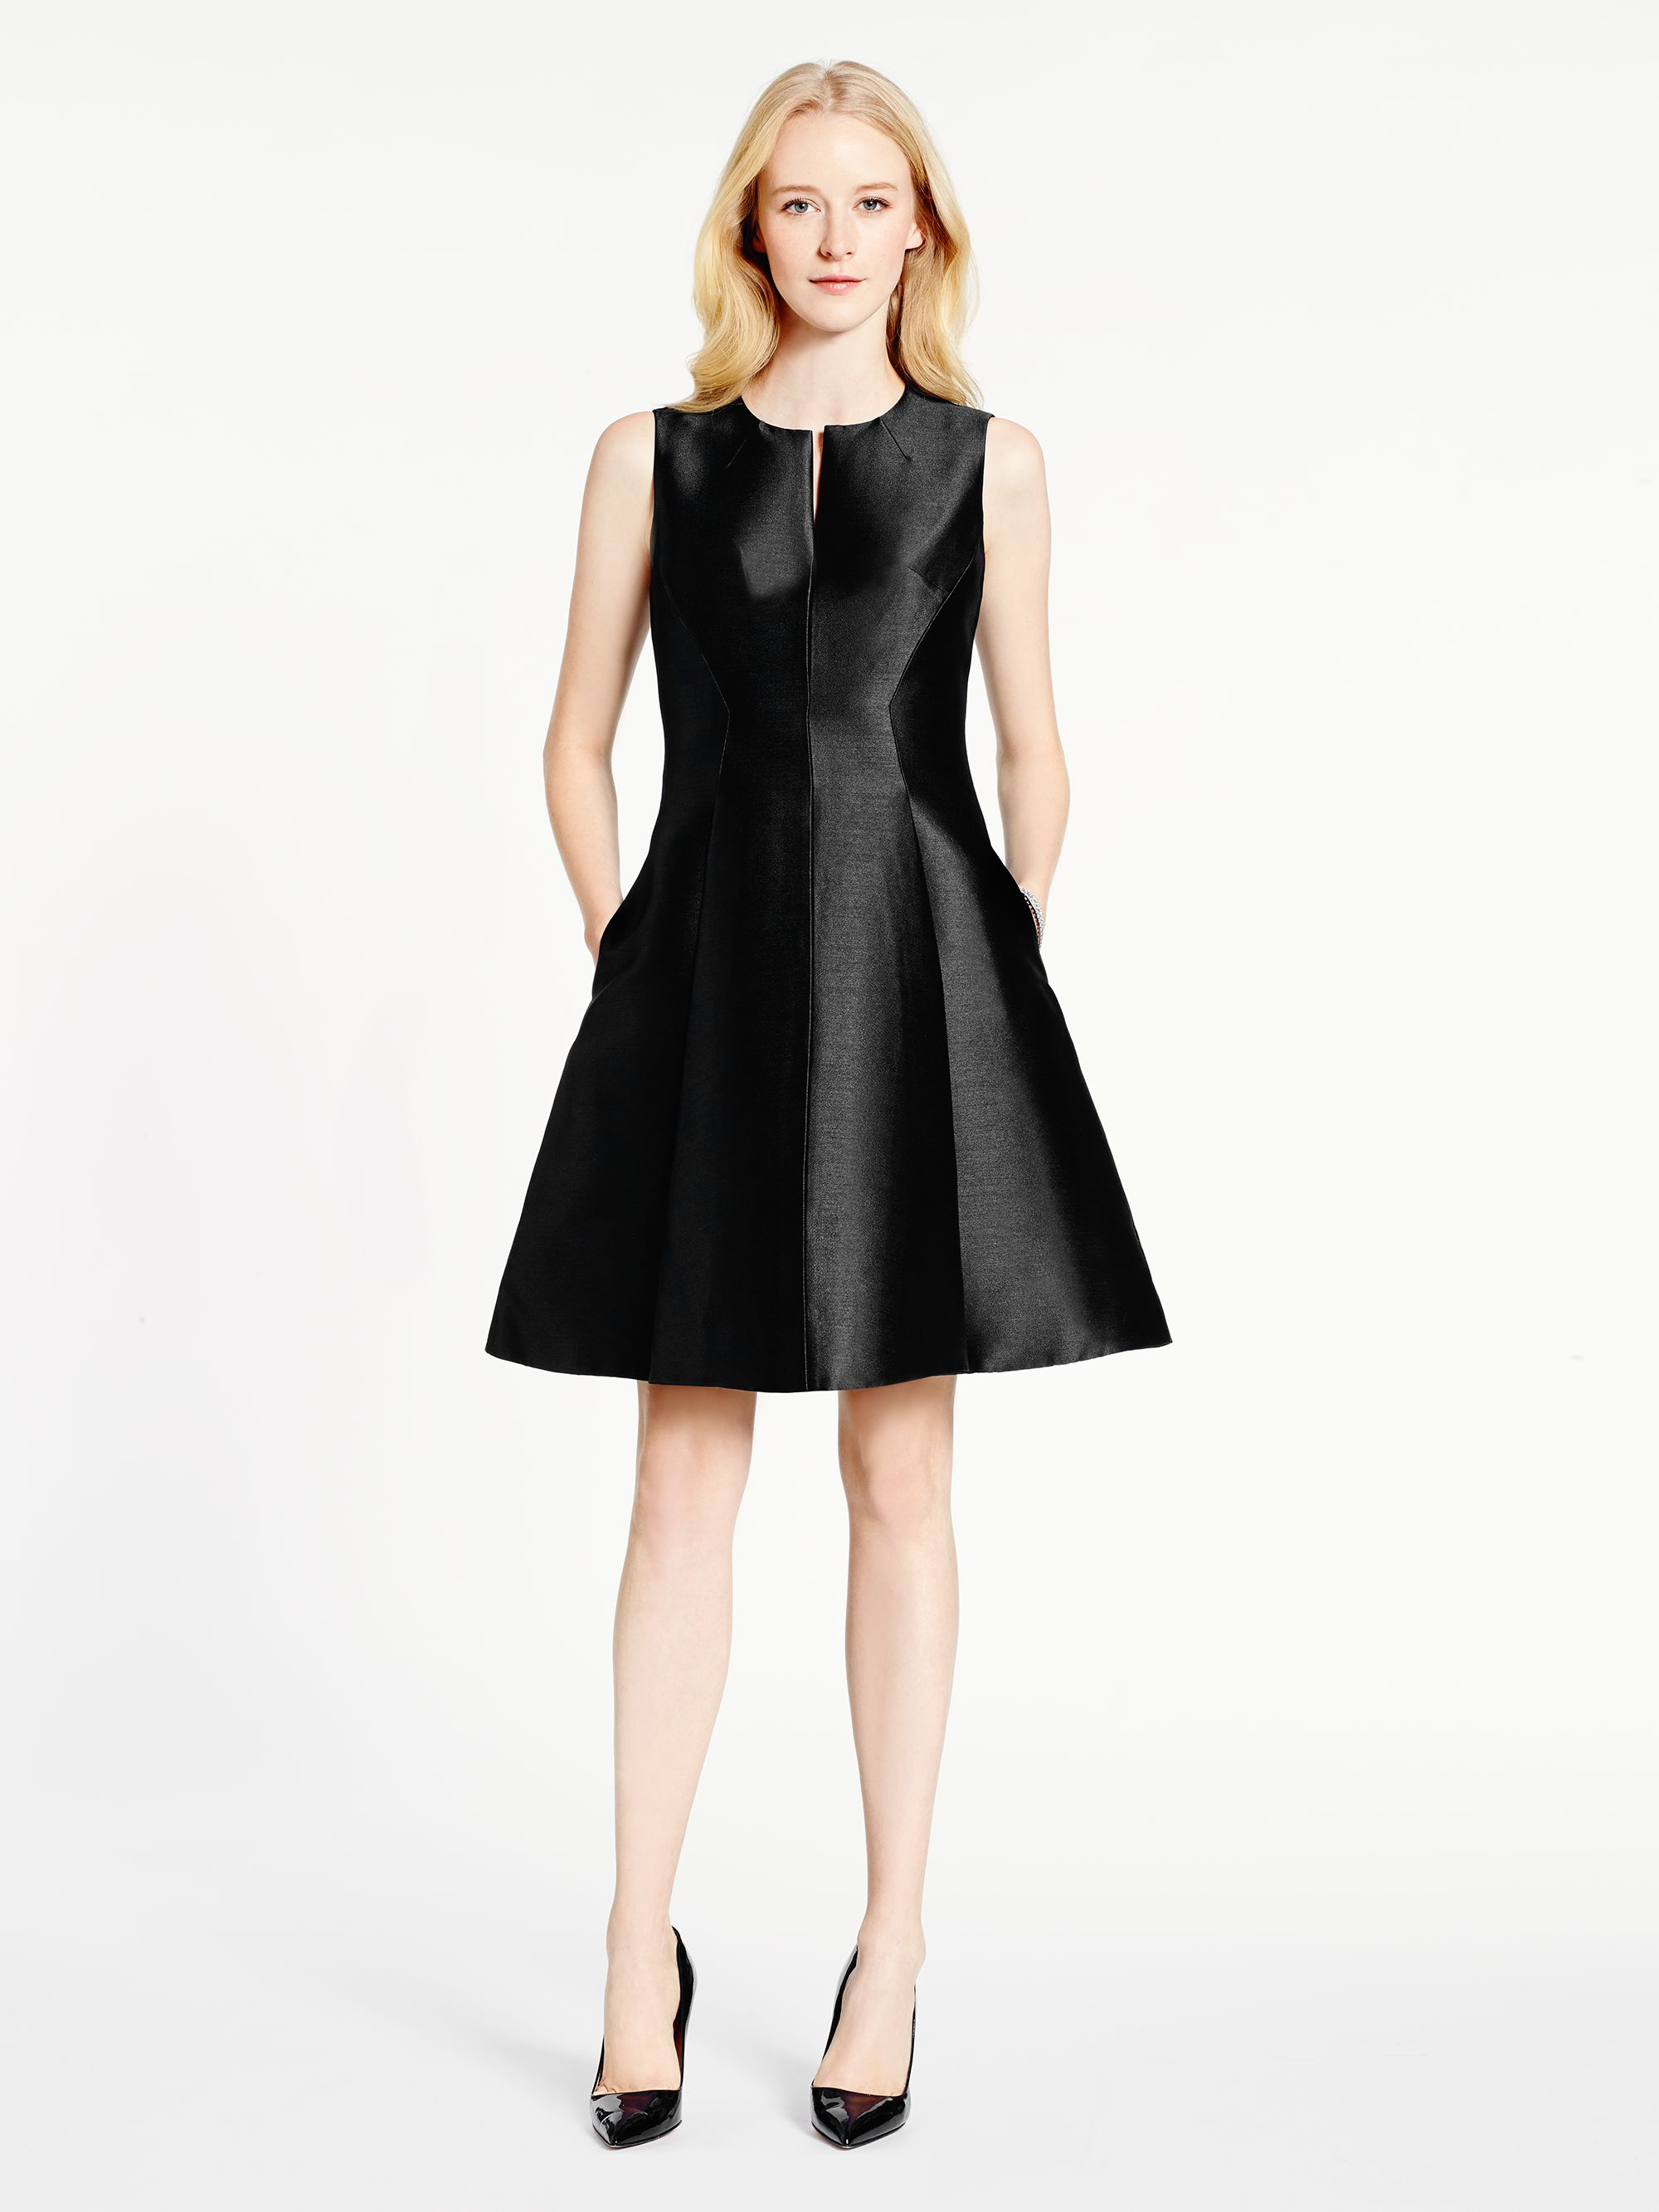 Kate Spade New York Black Charleen Dress Product 1 584470550 Normal 